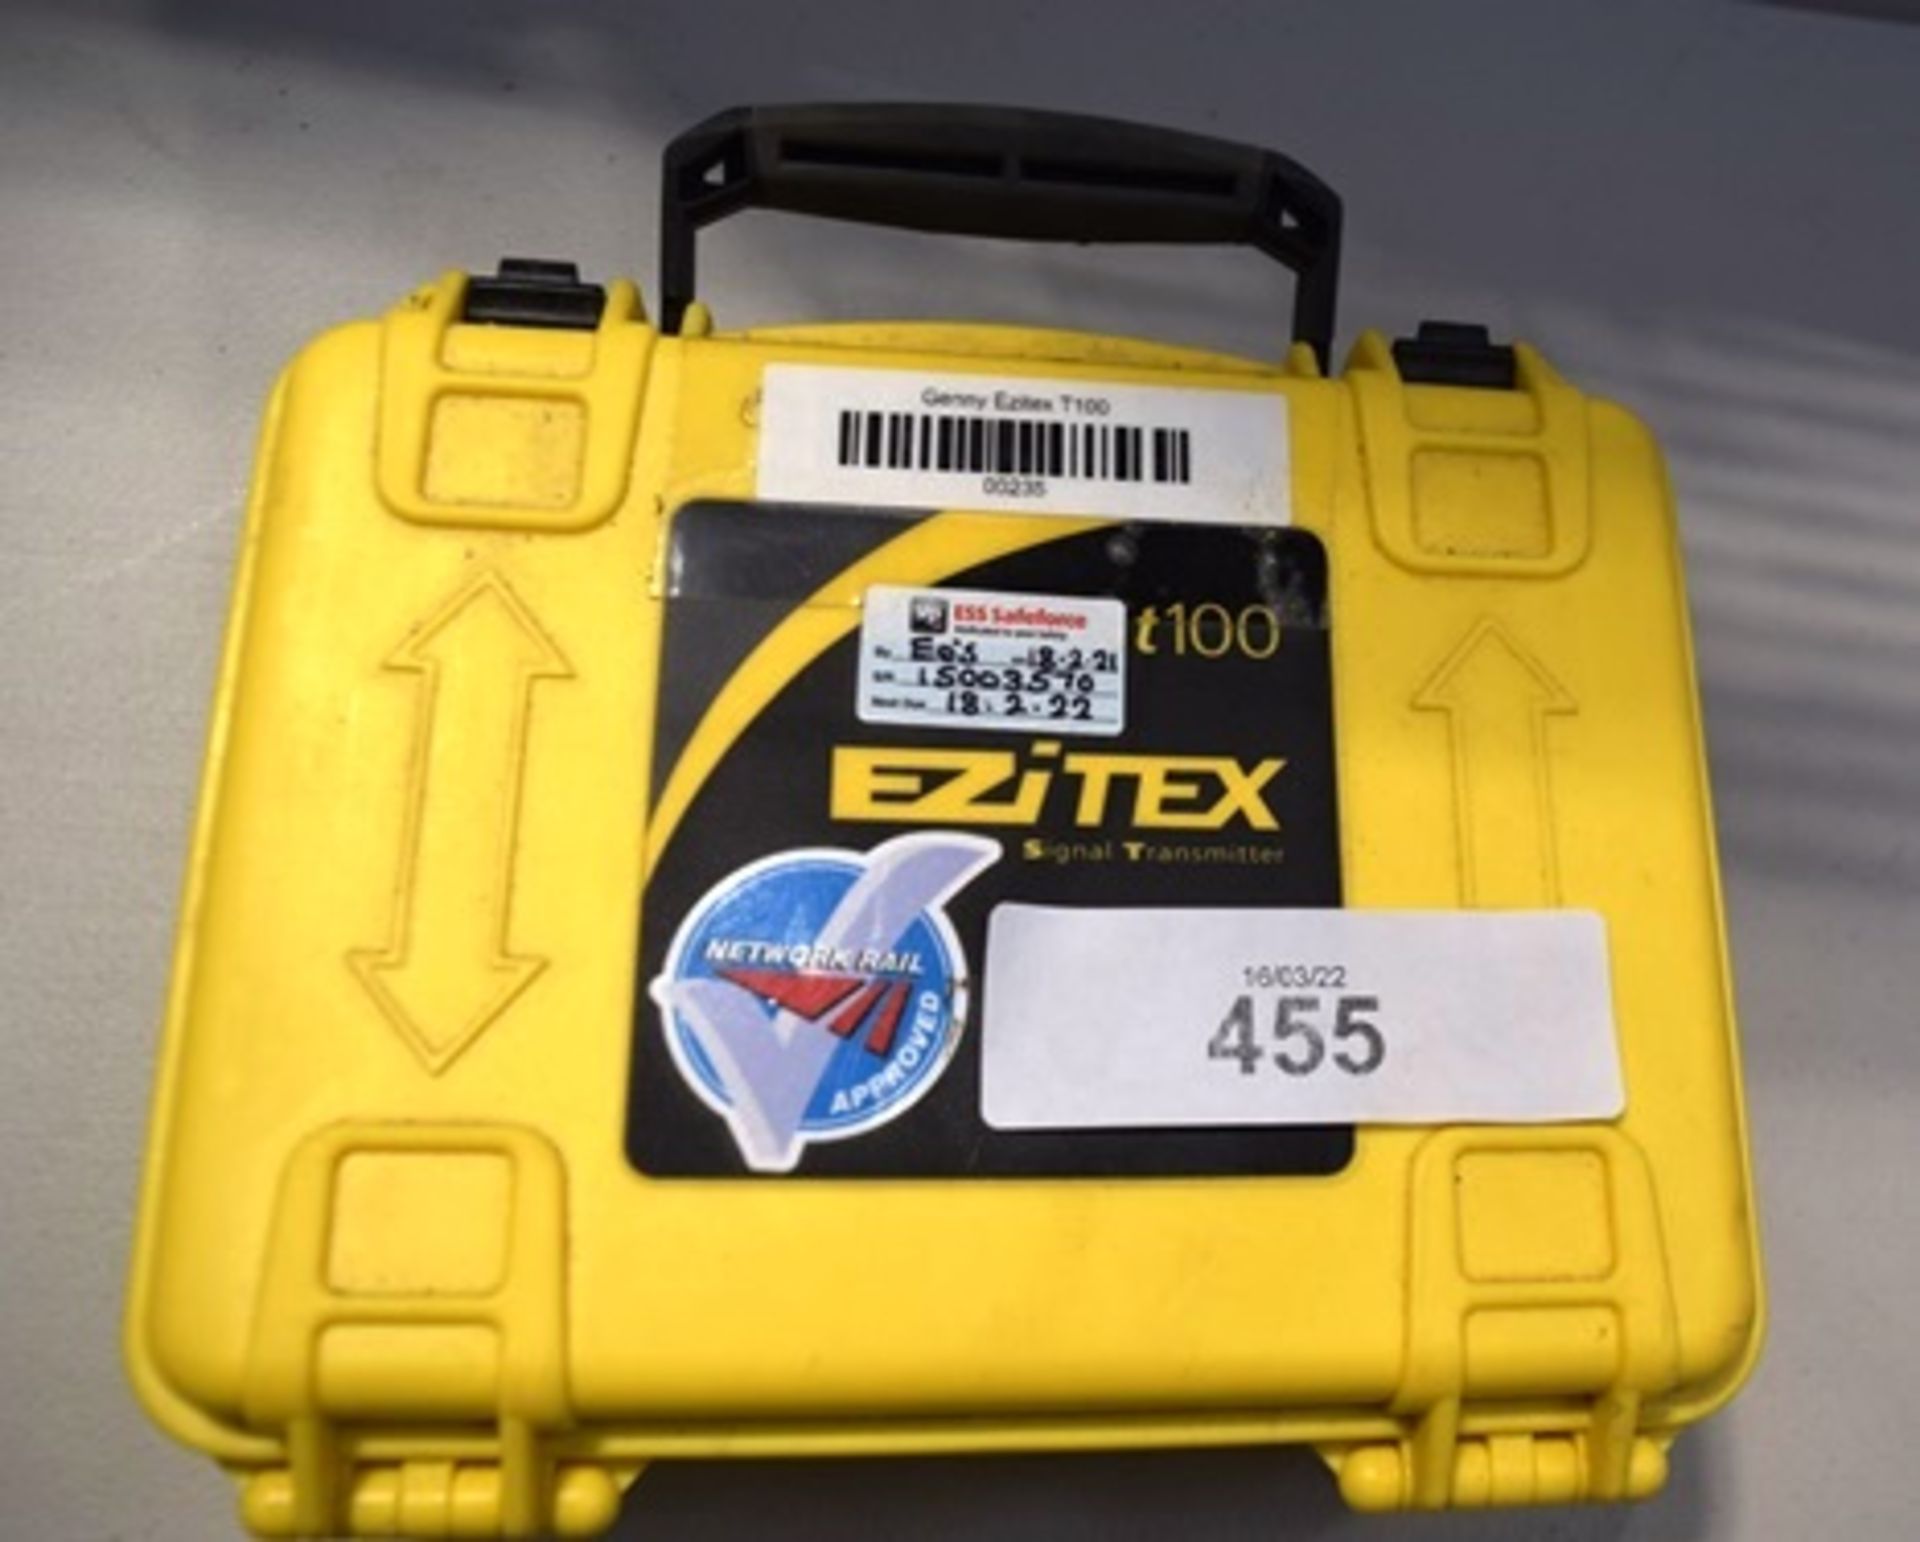 1 x Ezicat i550 cable avoidance tool, 1 x Ezicat T100 signal transmitter with yellow canvas case, - Image 4 of 6